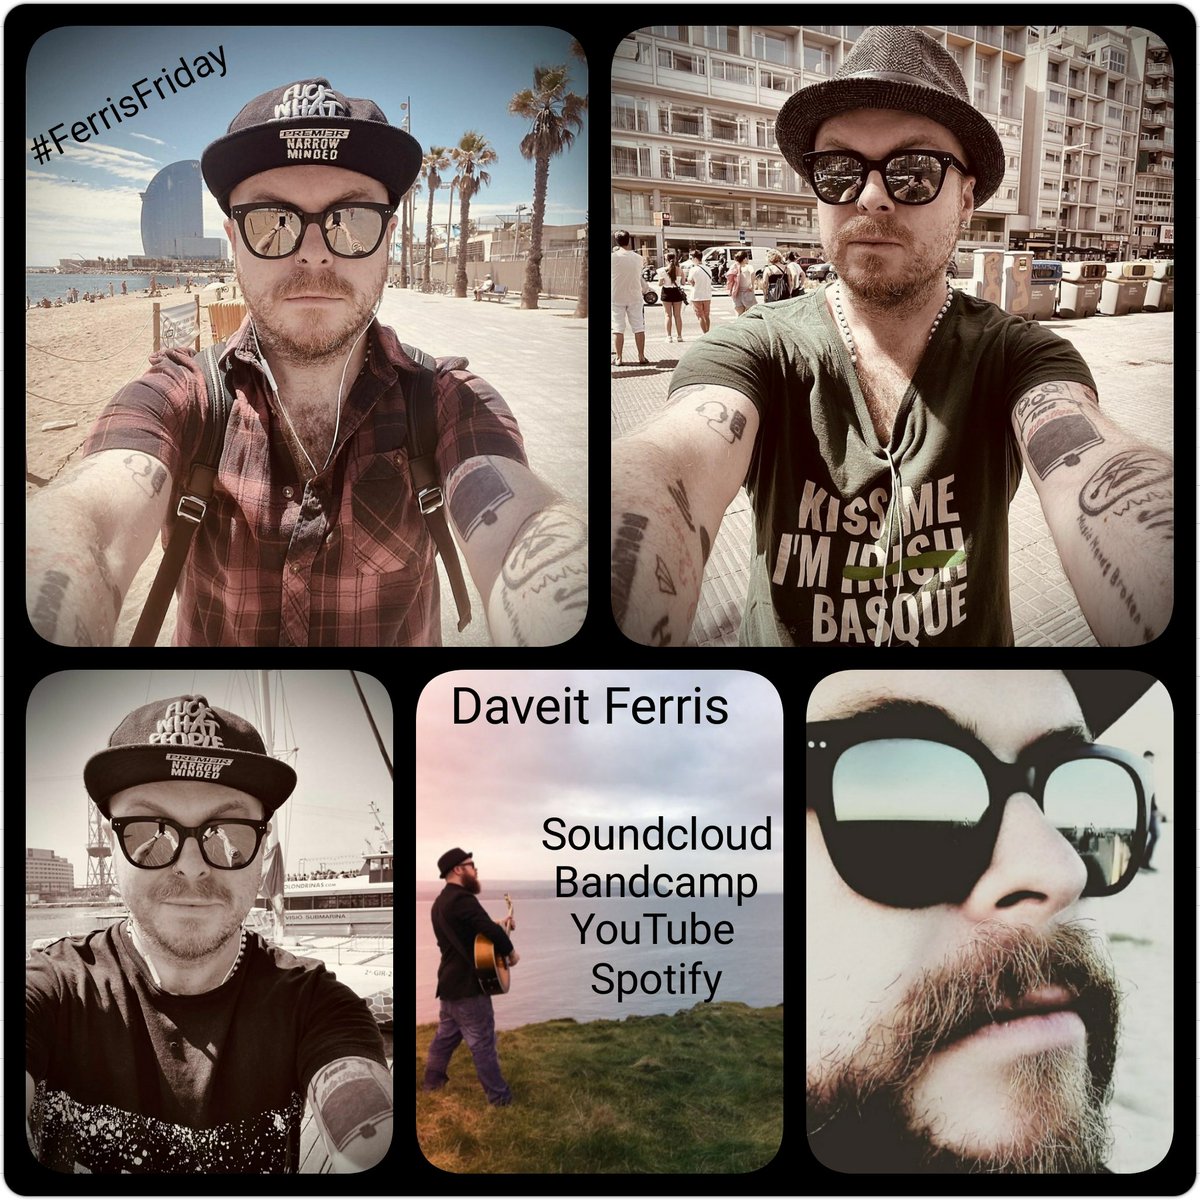 Spend this #FerrisFriday enjoying the brilliant music of the man himself, #DaveitFerris!!! #SupportArtists 

soundcloud.com/daveitferris

daveitferris.bandcamp.com 

m.youtube.com/channel/UCpKbj… 

open.spotify.com/artist/2xXLh8k…